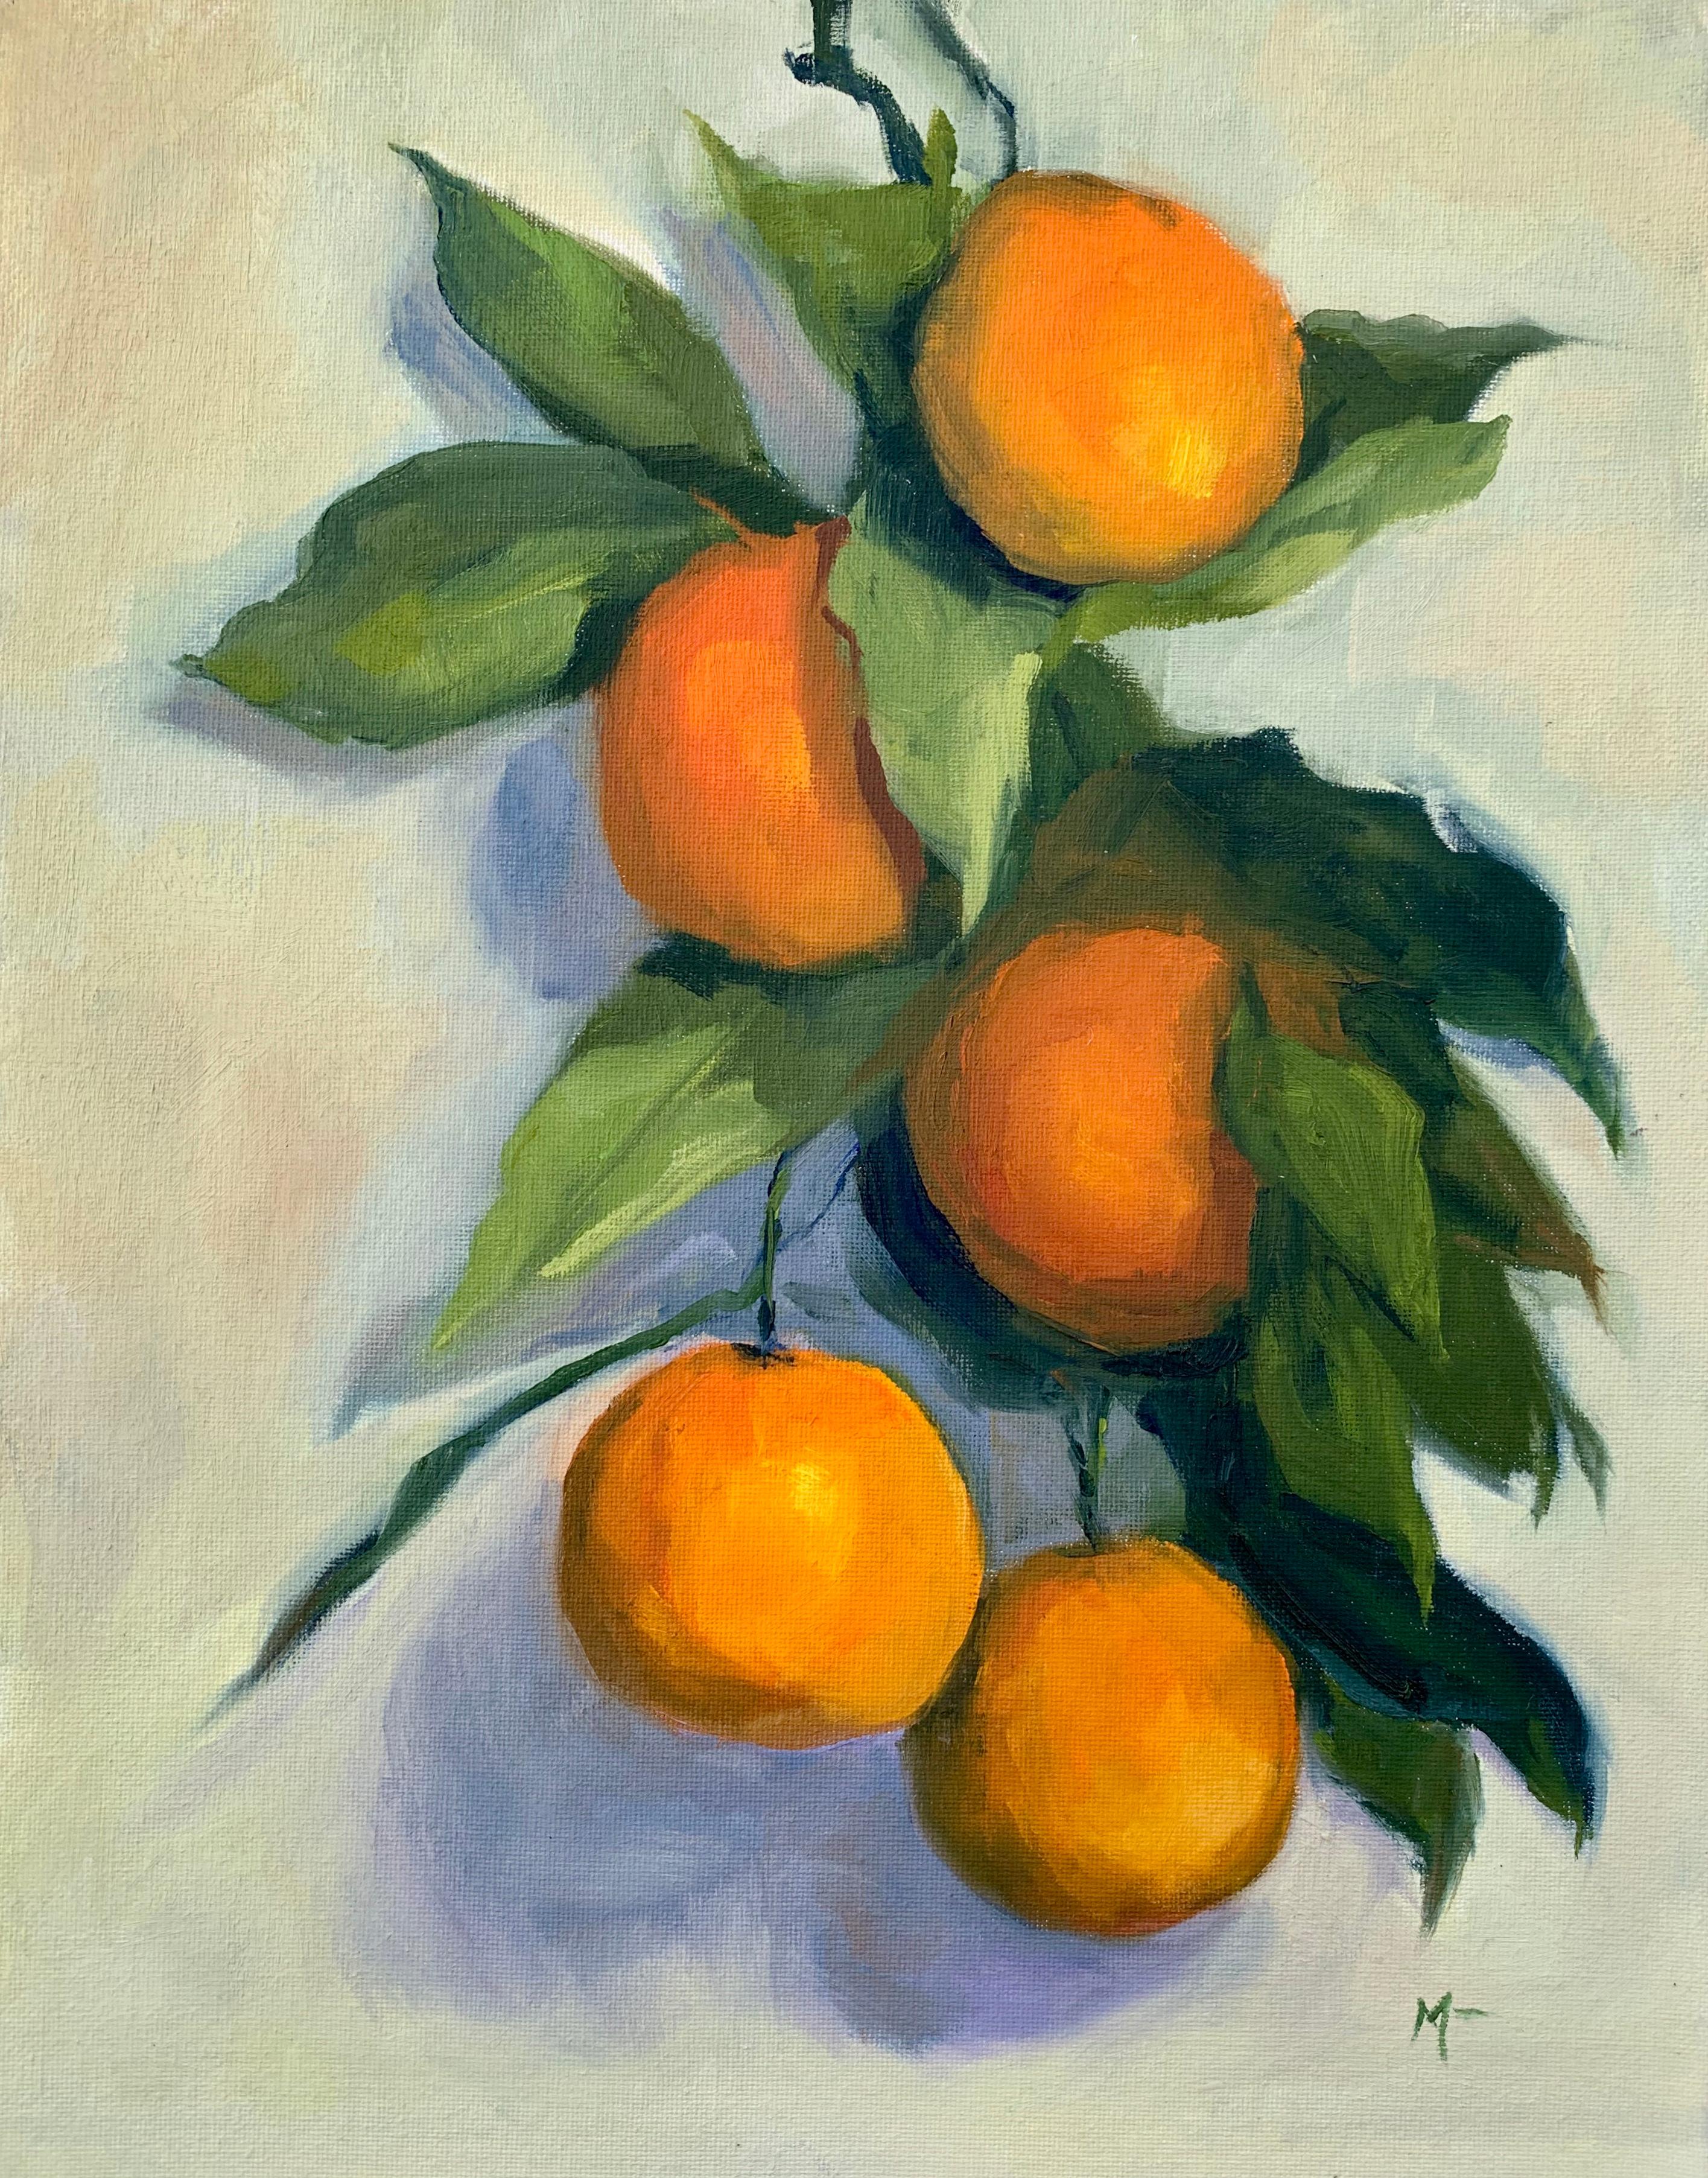 The Citrus Branch, Oil Painting - Art by Malia Pettit